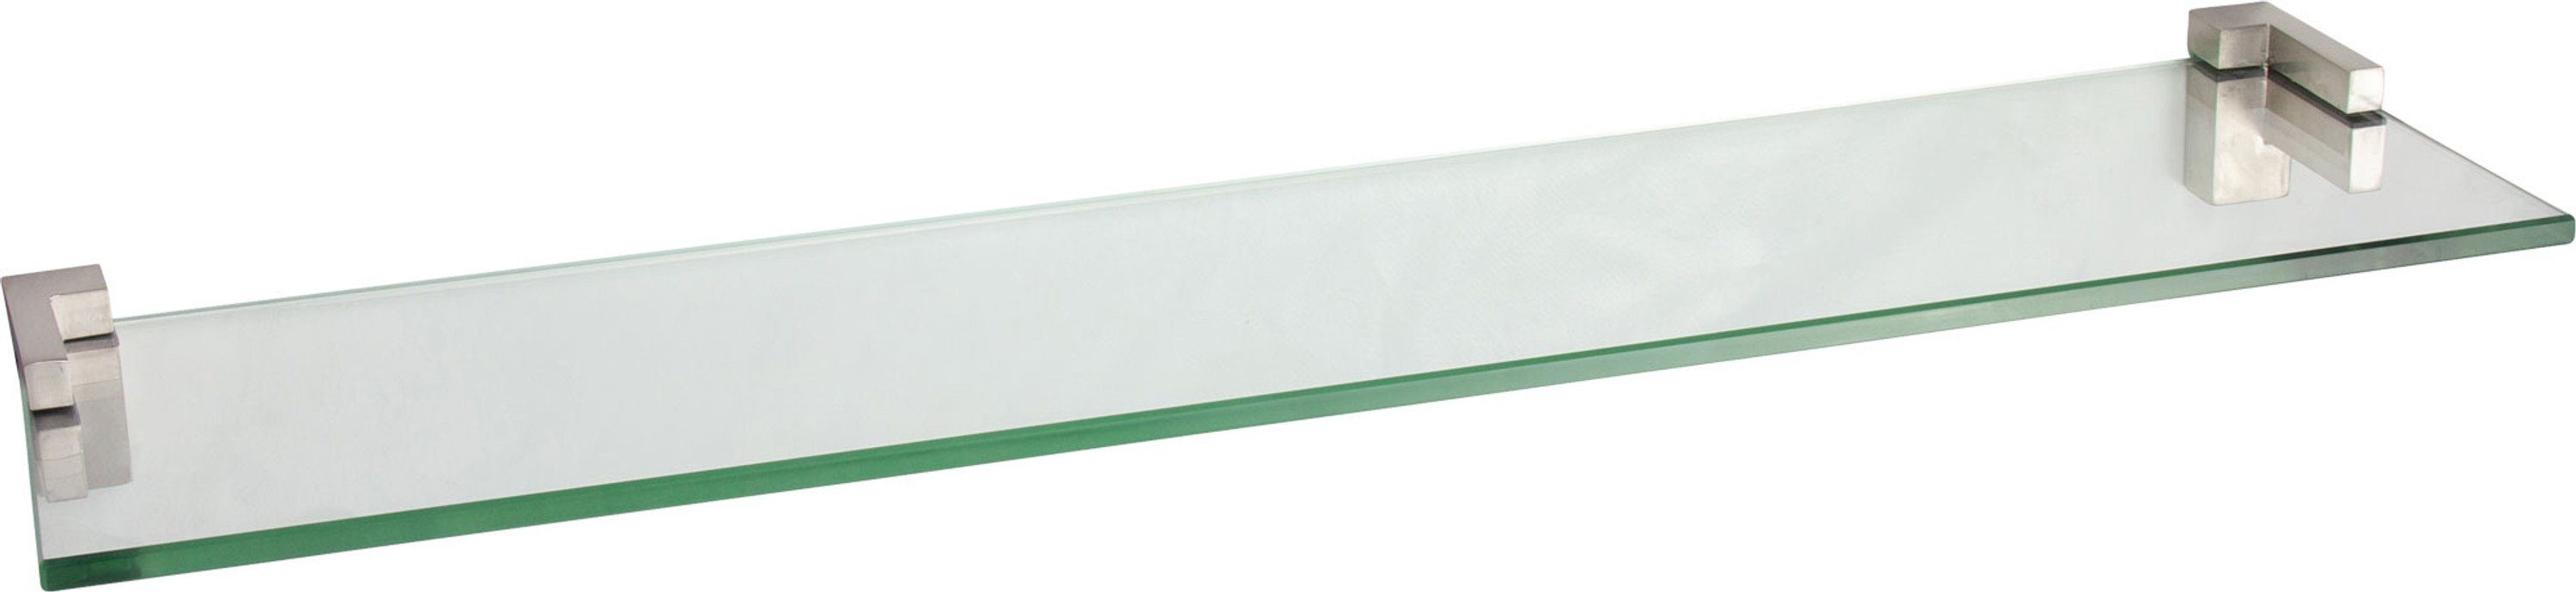 ib style Wandregal Glasregal 10mm klar 40 x 15 cm + Clip PIAZZA, Glasboden aus ESG-Sicherheitsglas - Wandregal